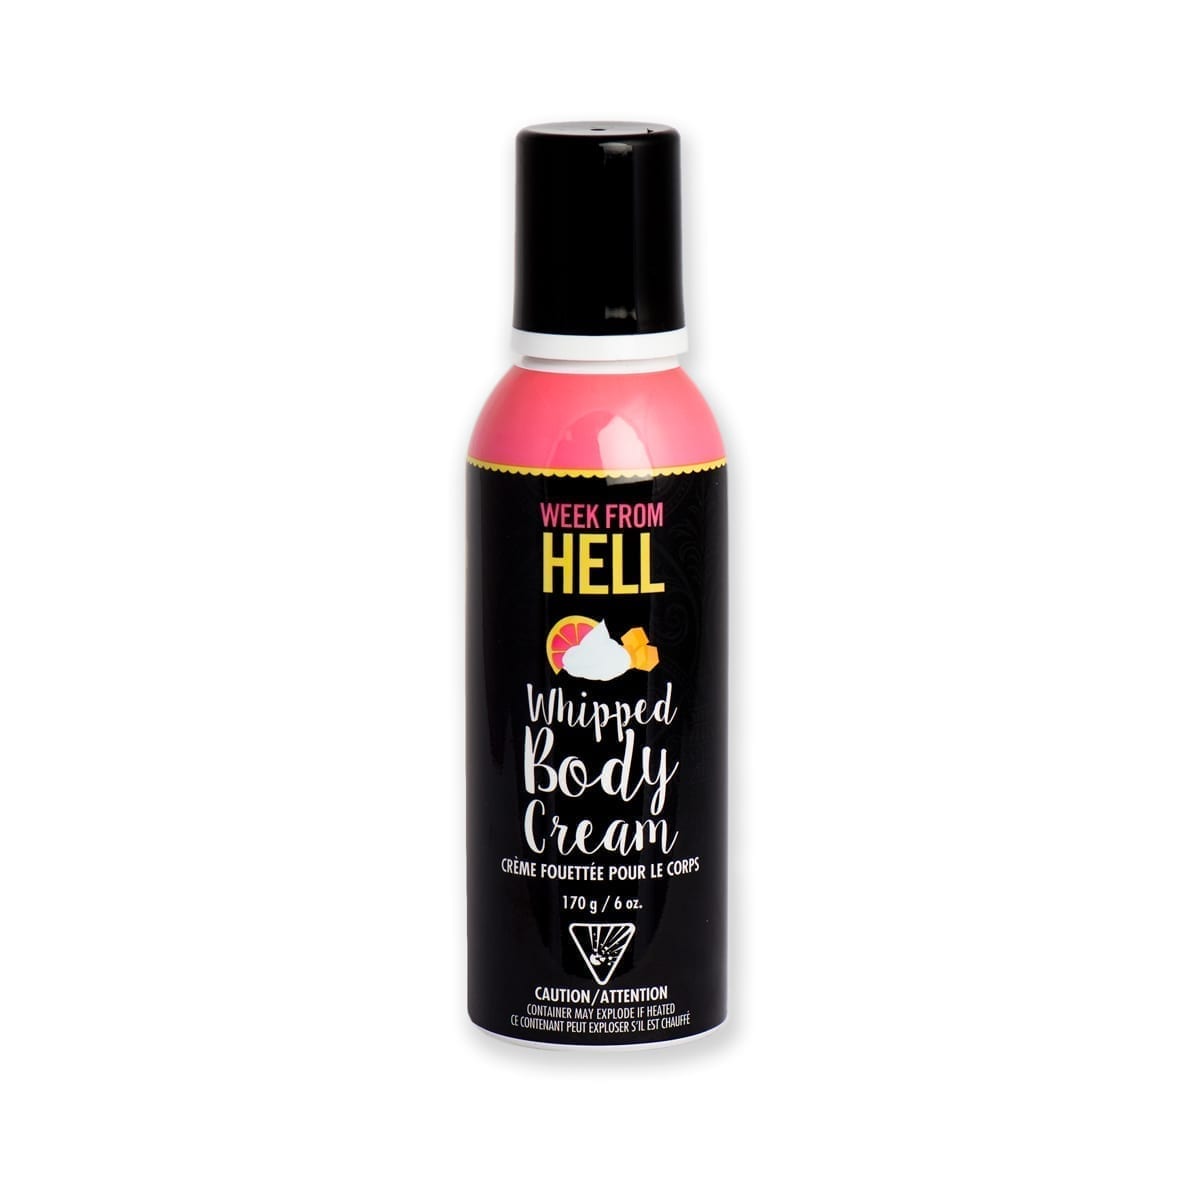 Body Oil Spray - Week from Hell 4oz